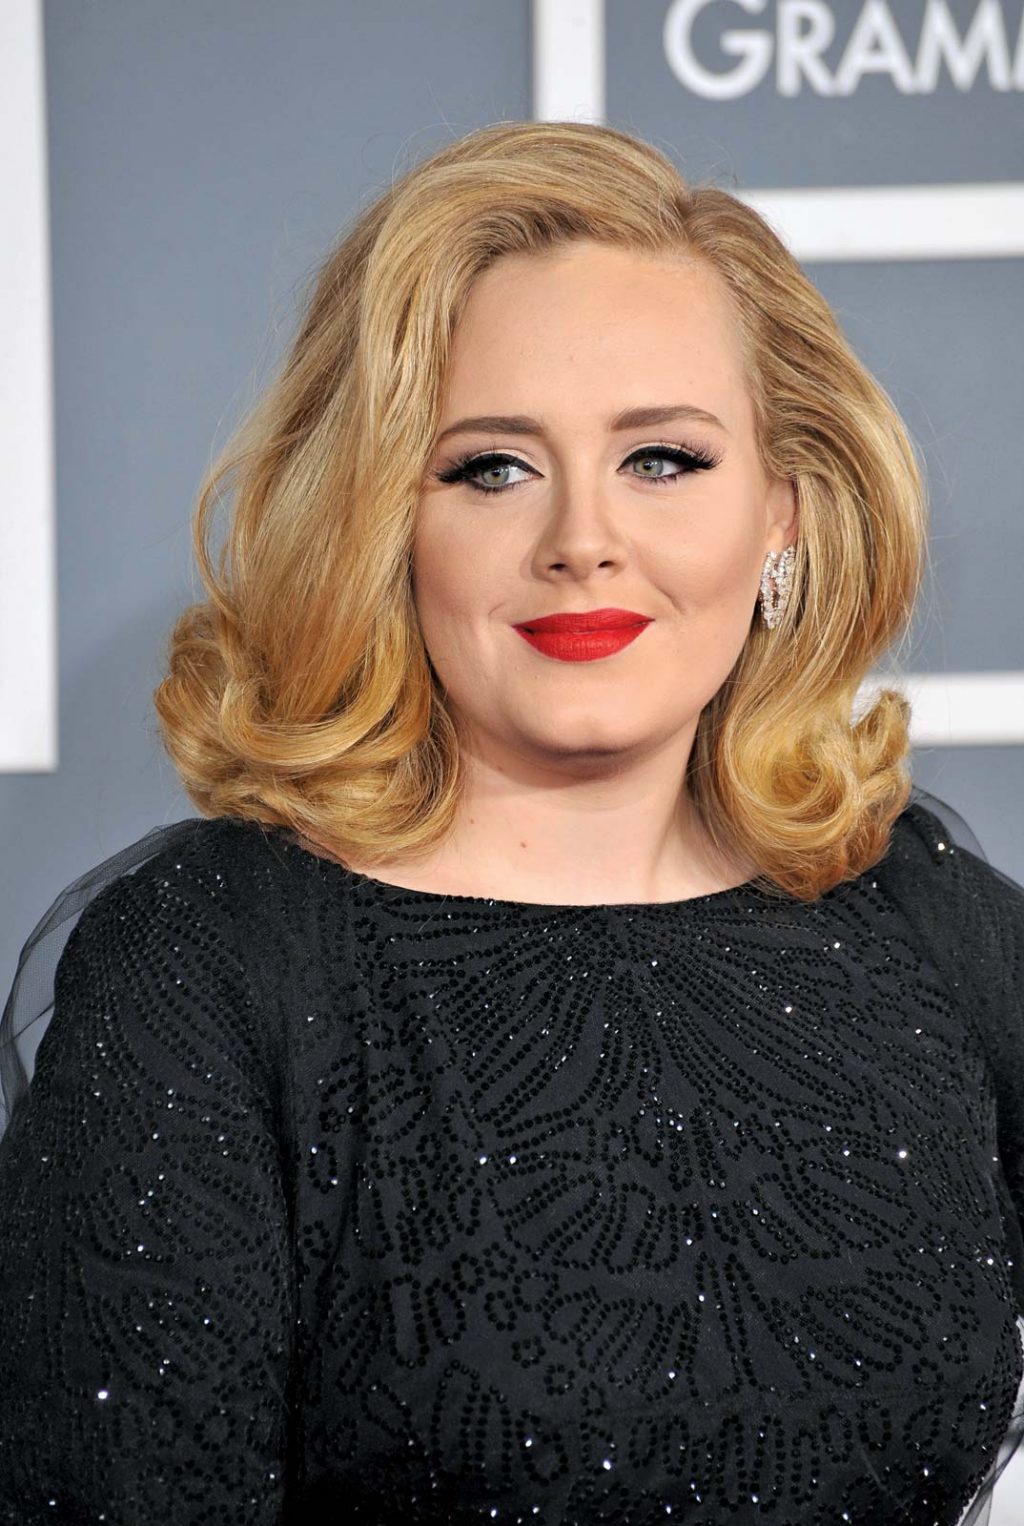 Adele phương pháp giảm cân